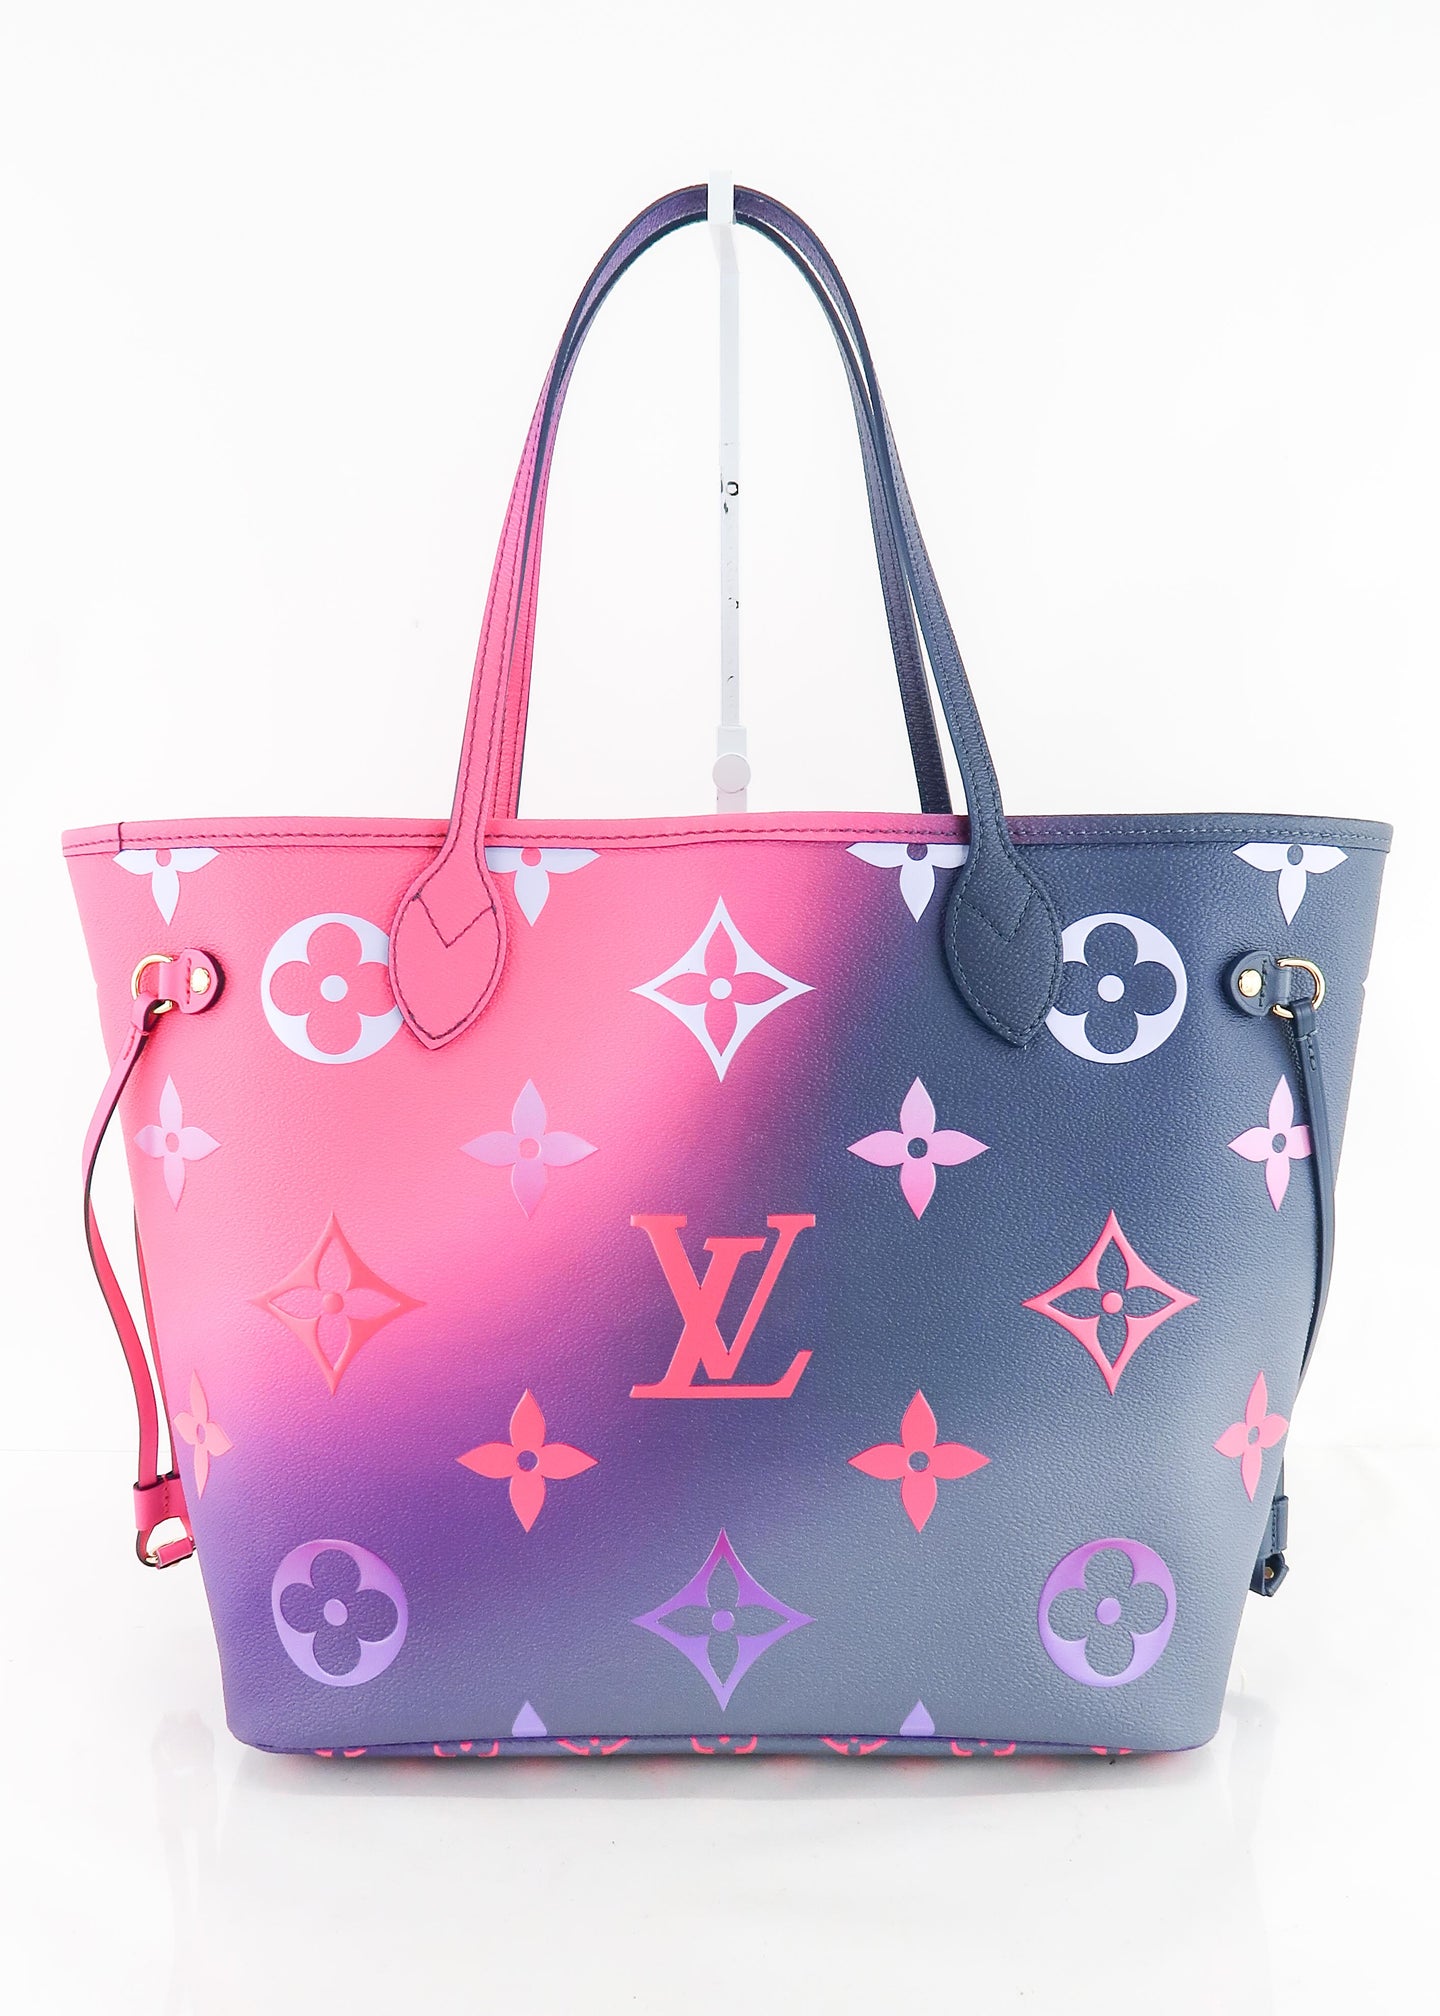 Louis Vuitton LV women's tie-dye mobile phone bag handbag shoulder bag